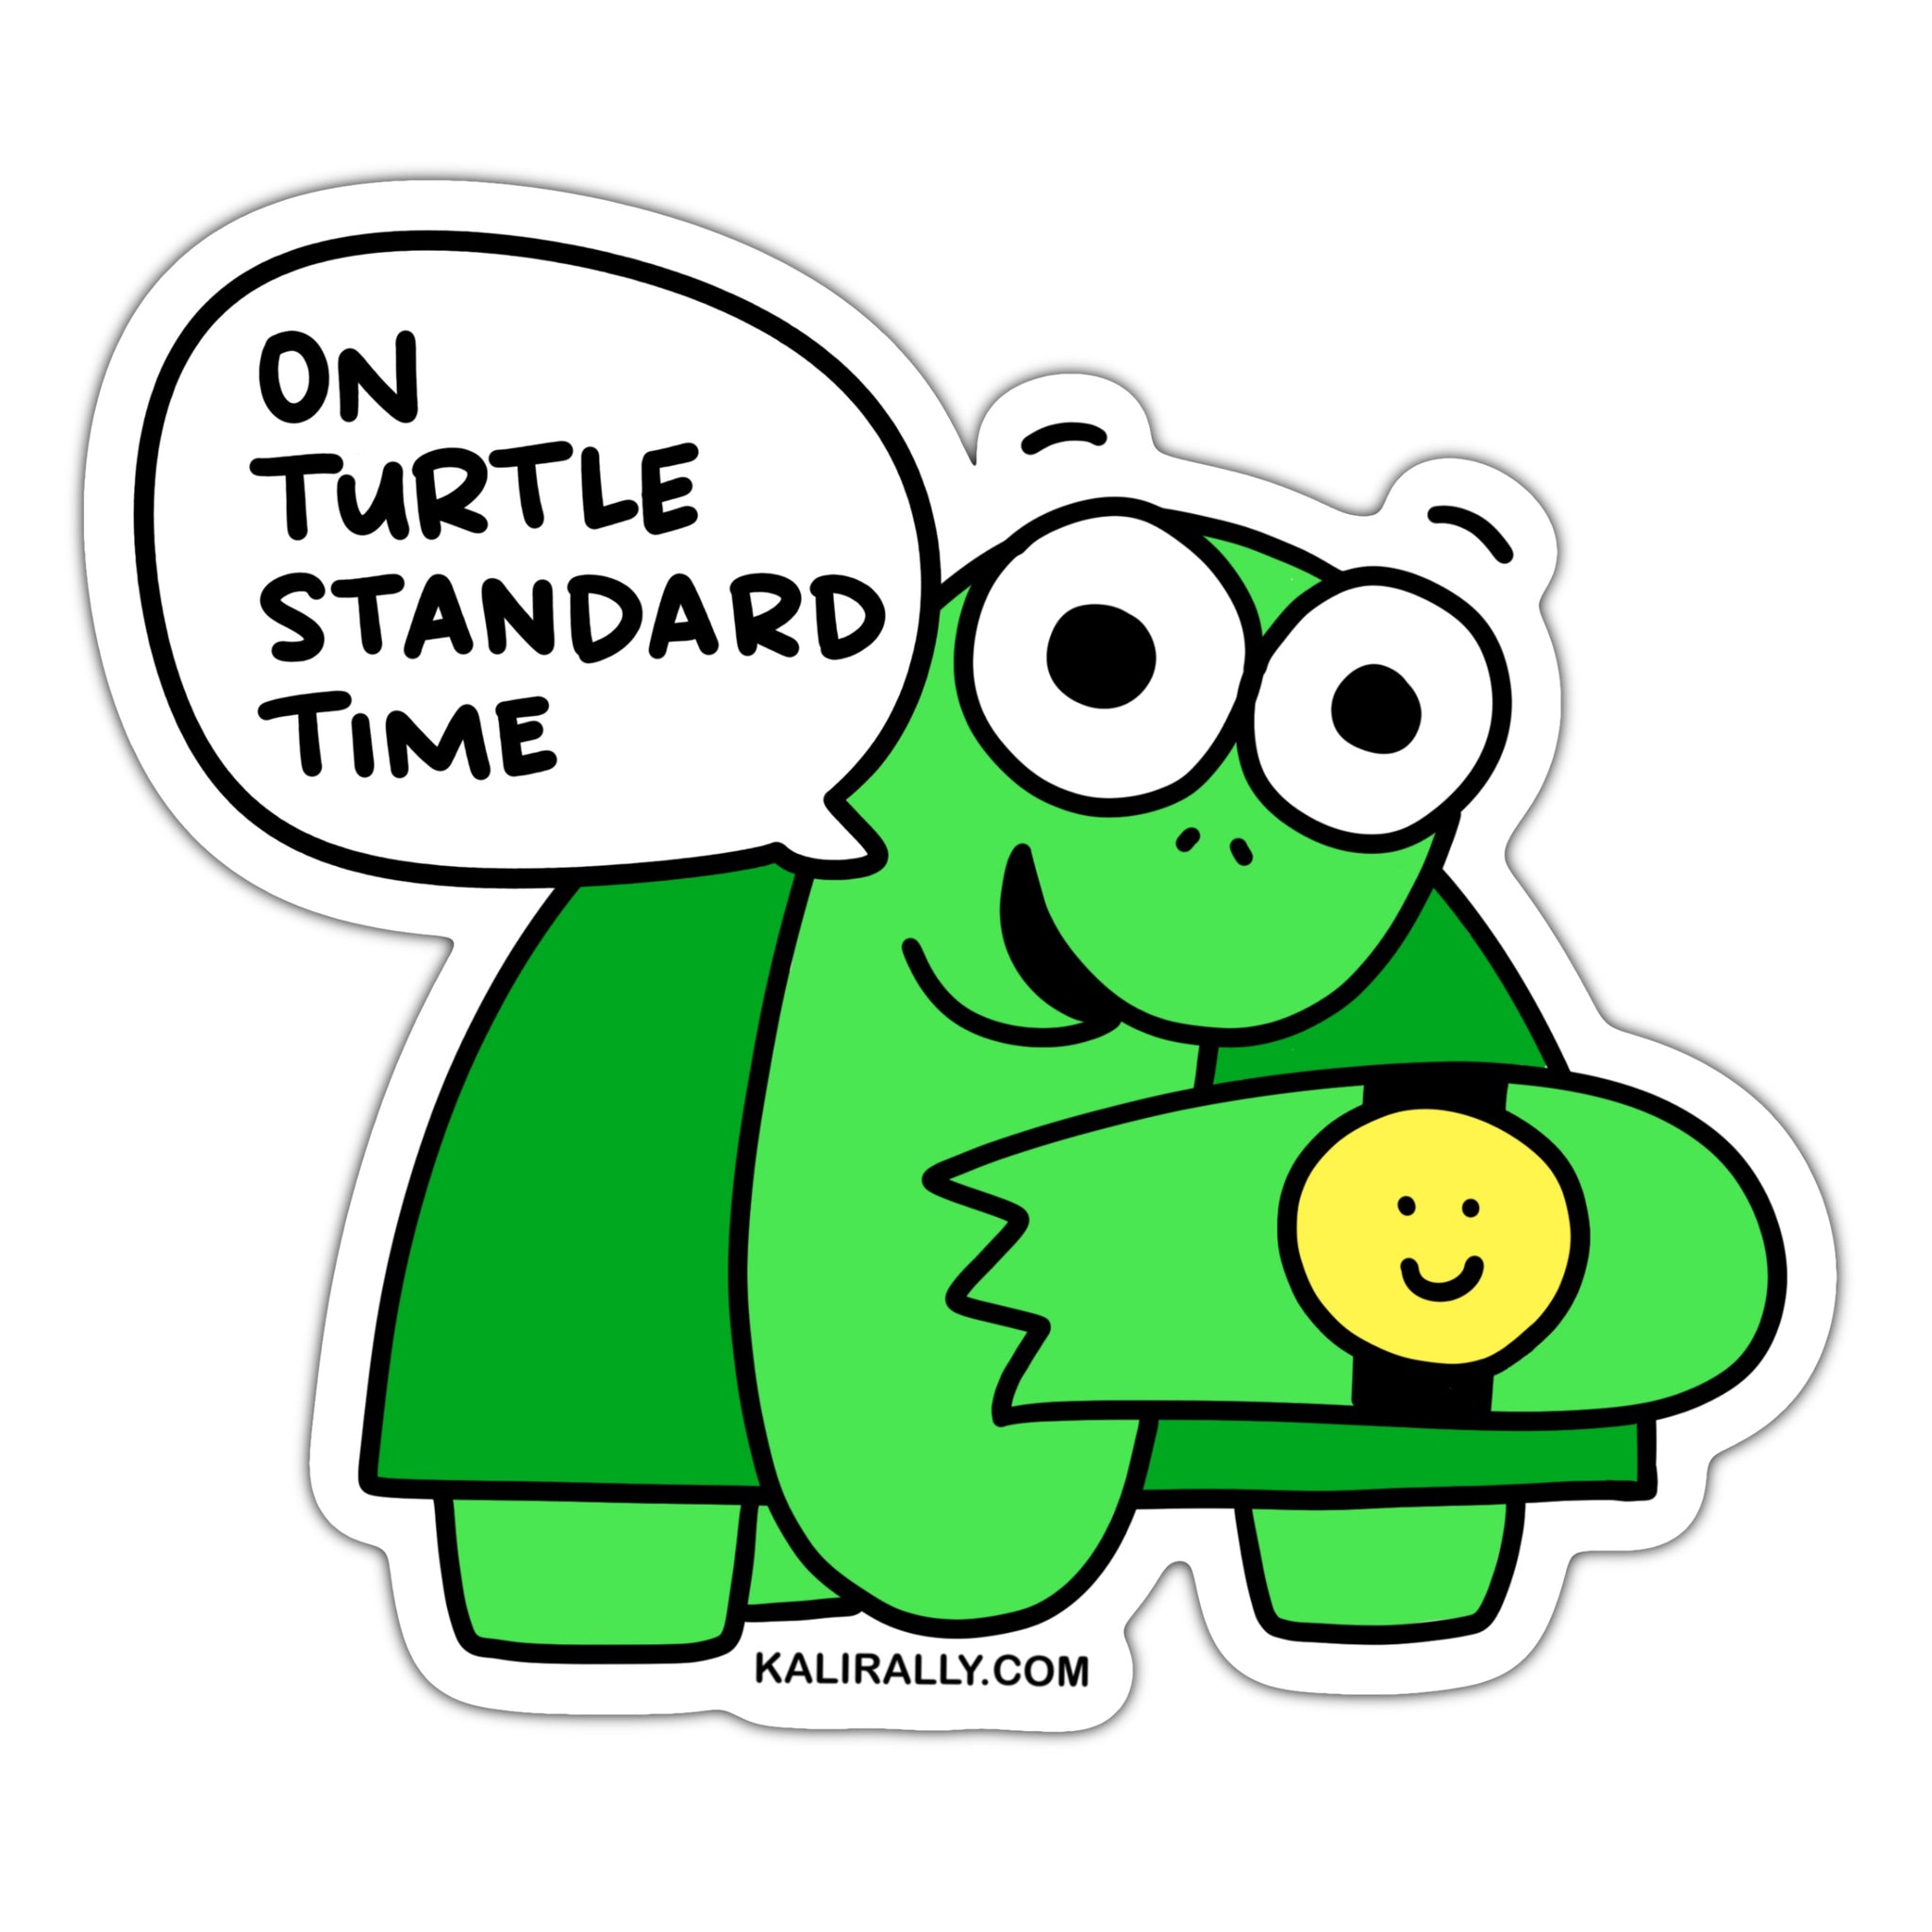 On Turtle Standard Time, always late sticker, procrastination sticker, slow and steady wins, waterproof vinyl sticker